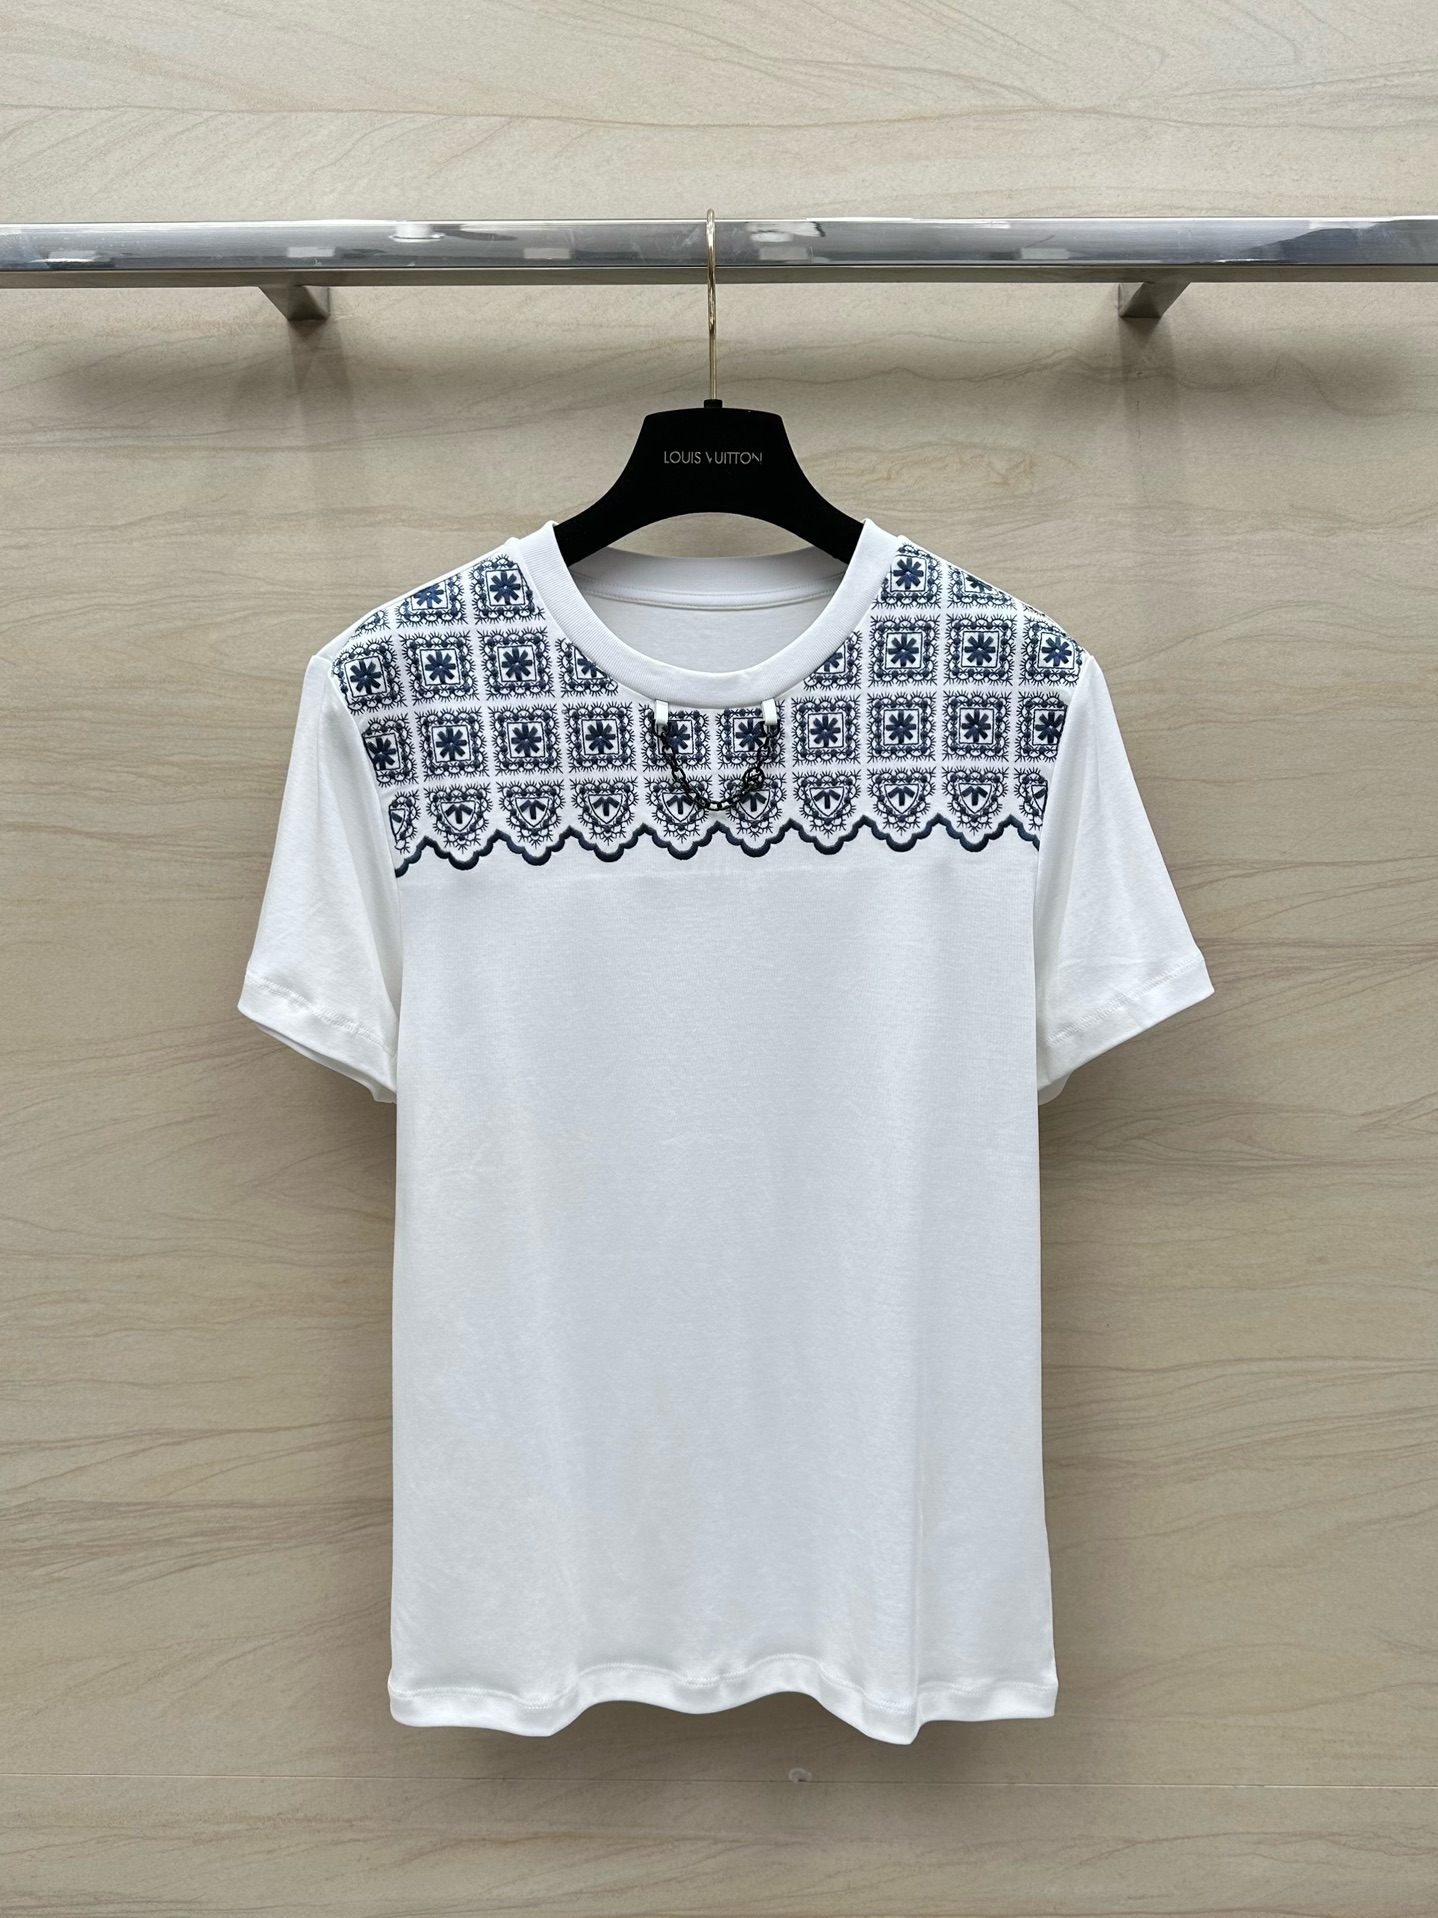 Louis Vuitton Kleding T-Shirt Borduurwerk Lente/Zomercollectie Kettingen